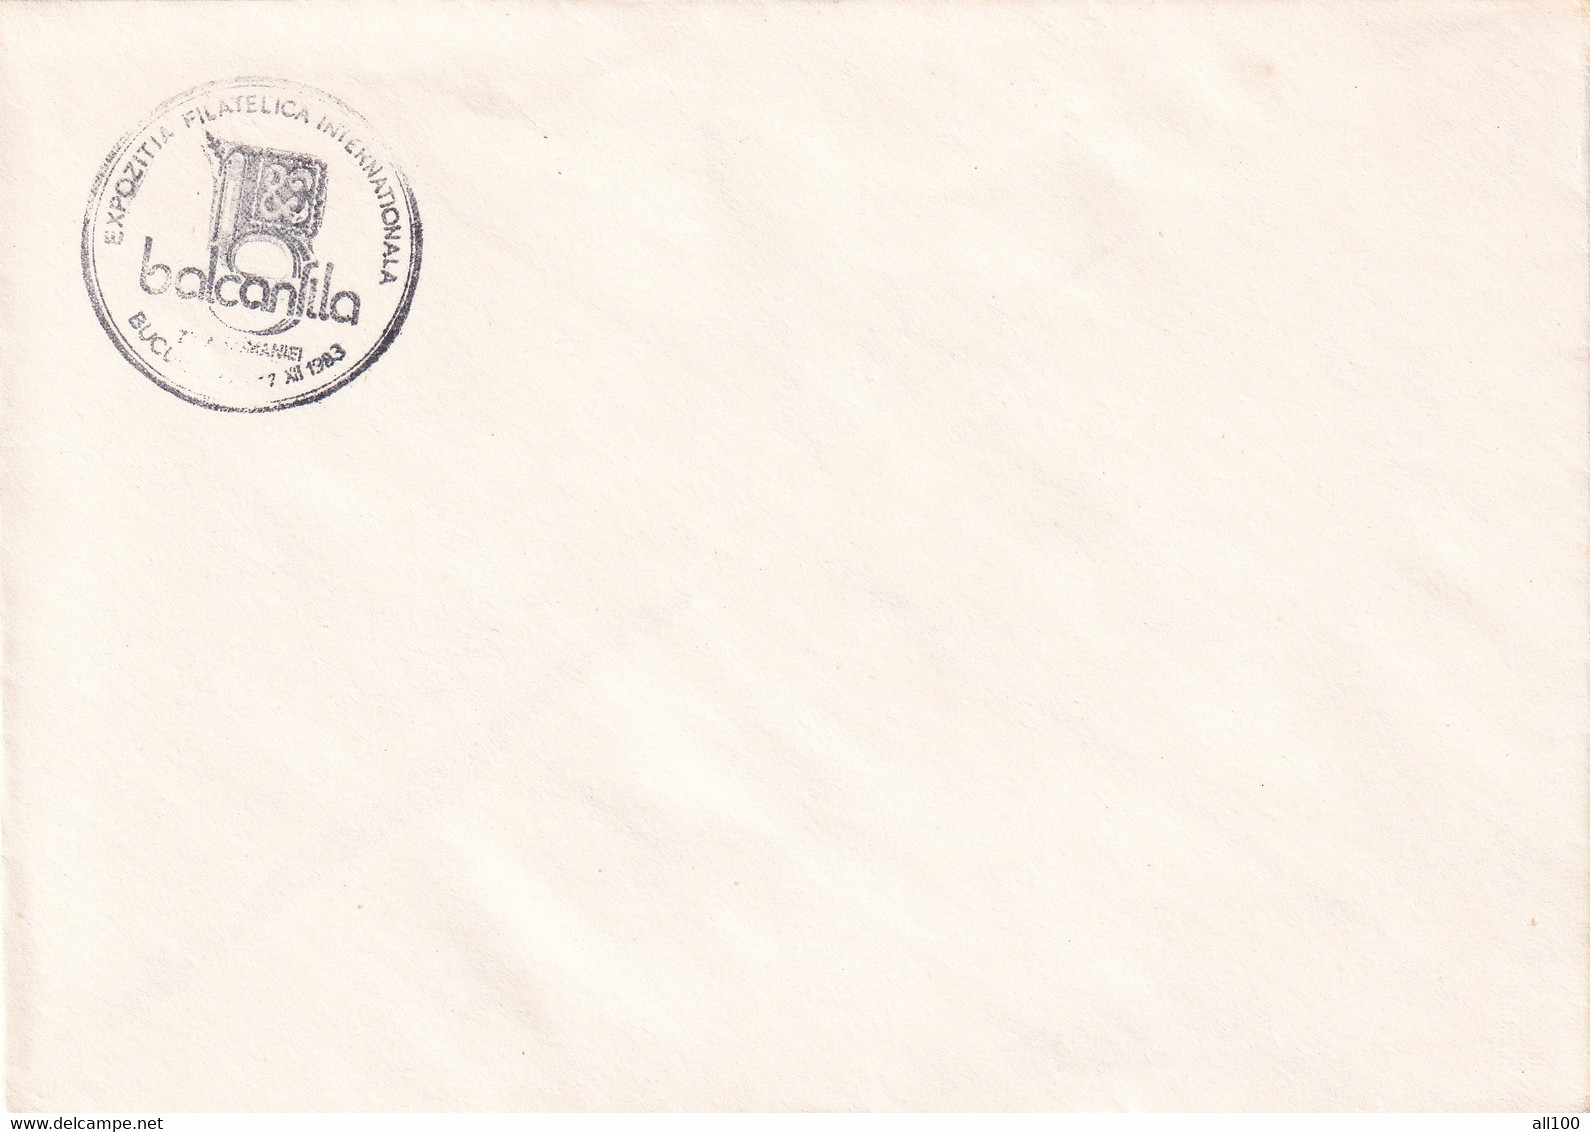 A19344 - EXPOZITIA FILATELICA INTERNATIONALA BALCANLILA ZIUA ROMANIEI BUCURESTI COVER ENVELOPE UNUSED 1983 RSR - Lettres & Documents